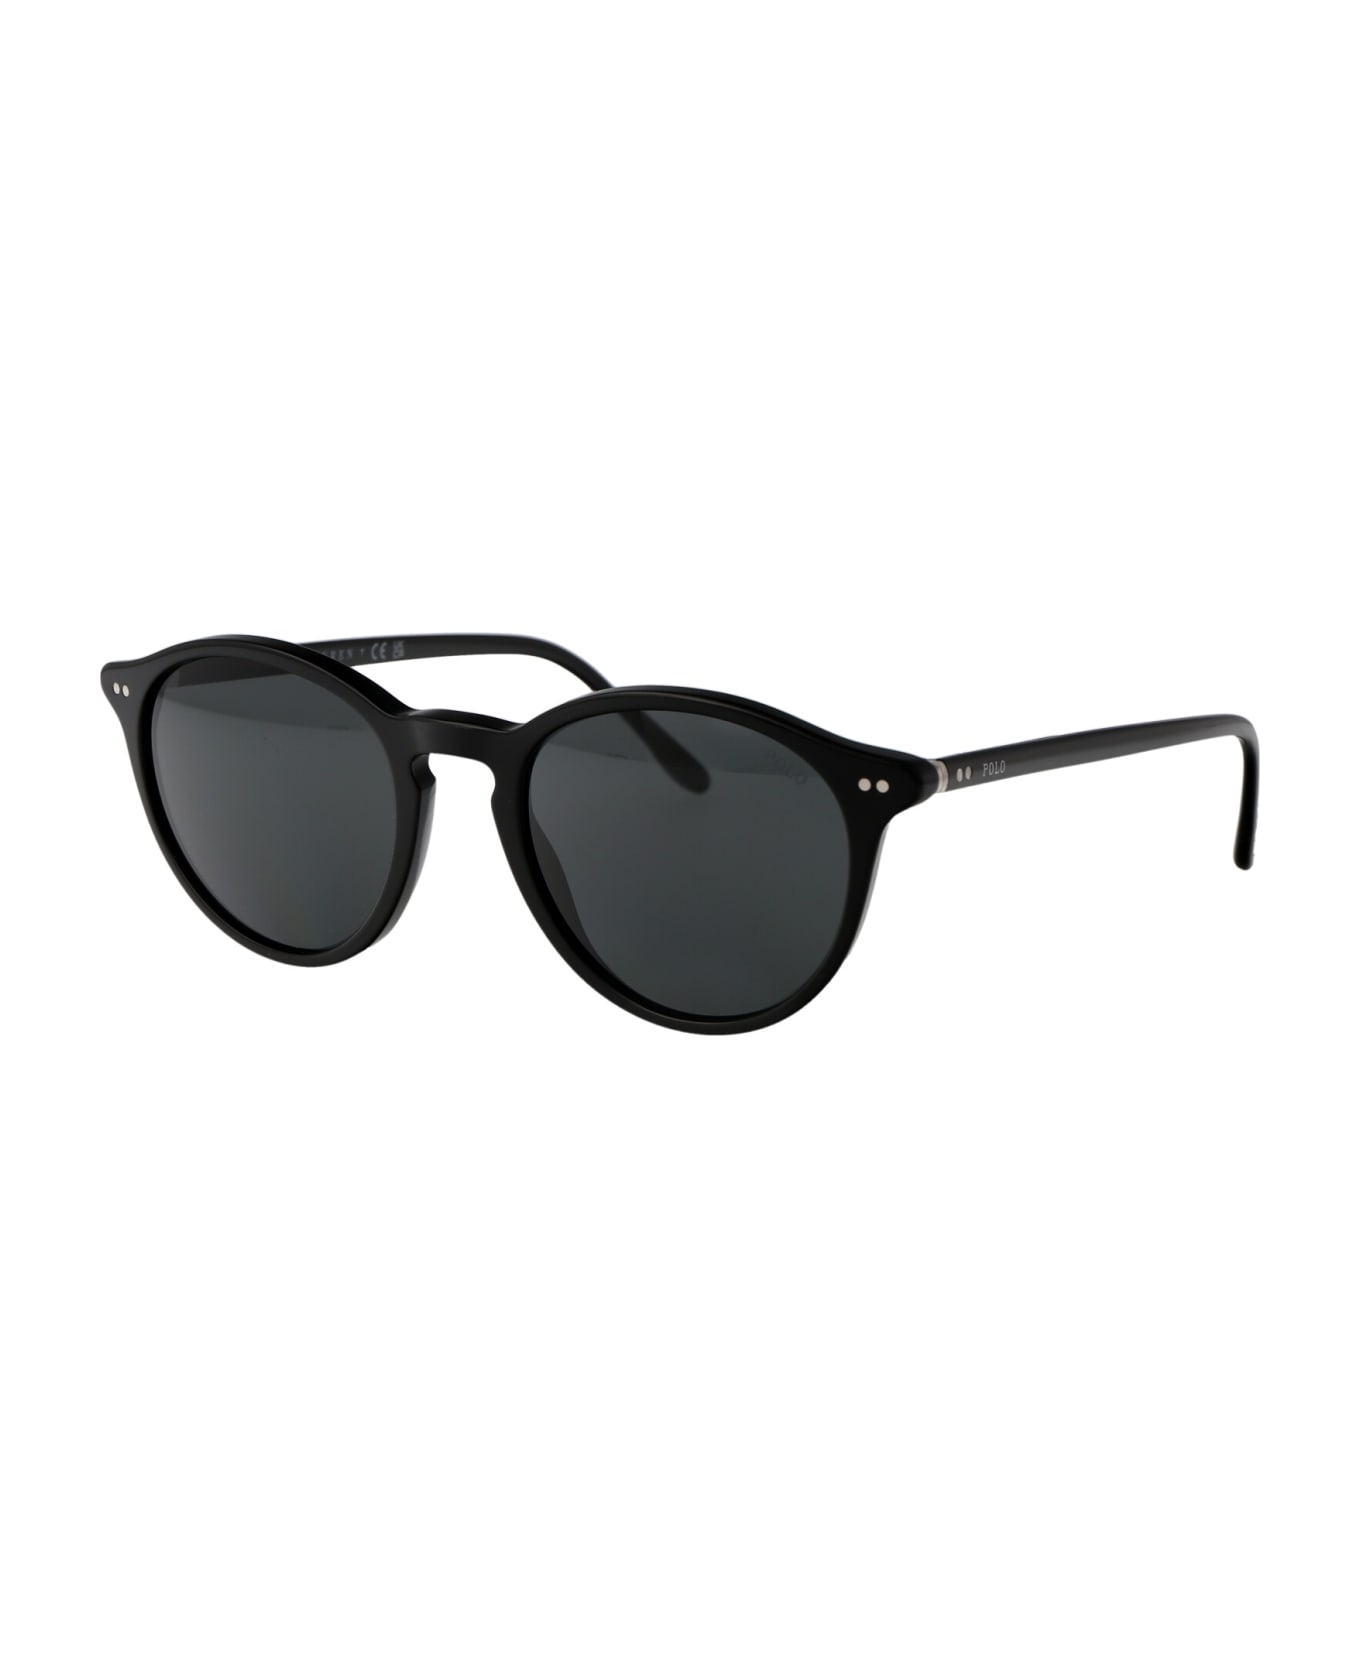 Polo Ralph Lauren 0ph4193 Sunglasses - 500187 SHINY BLACK